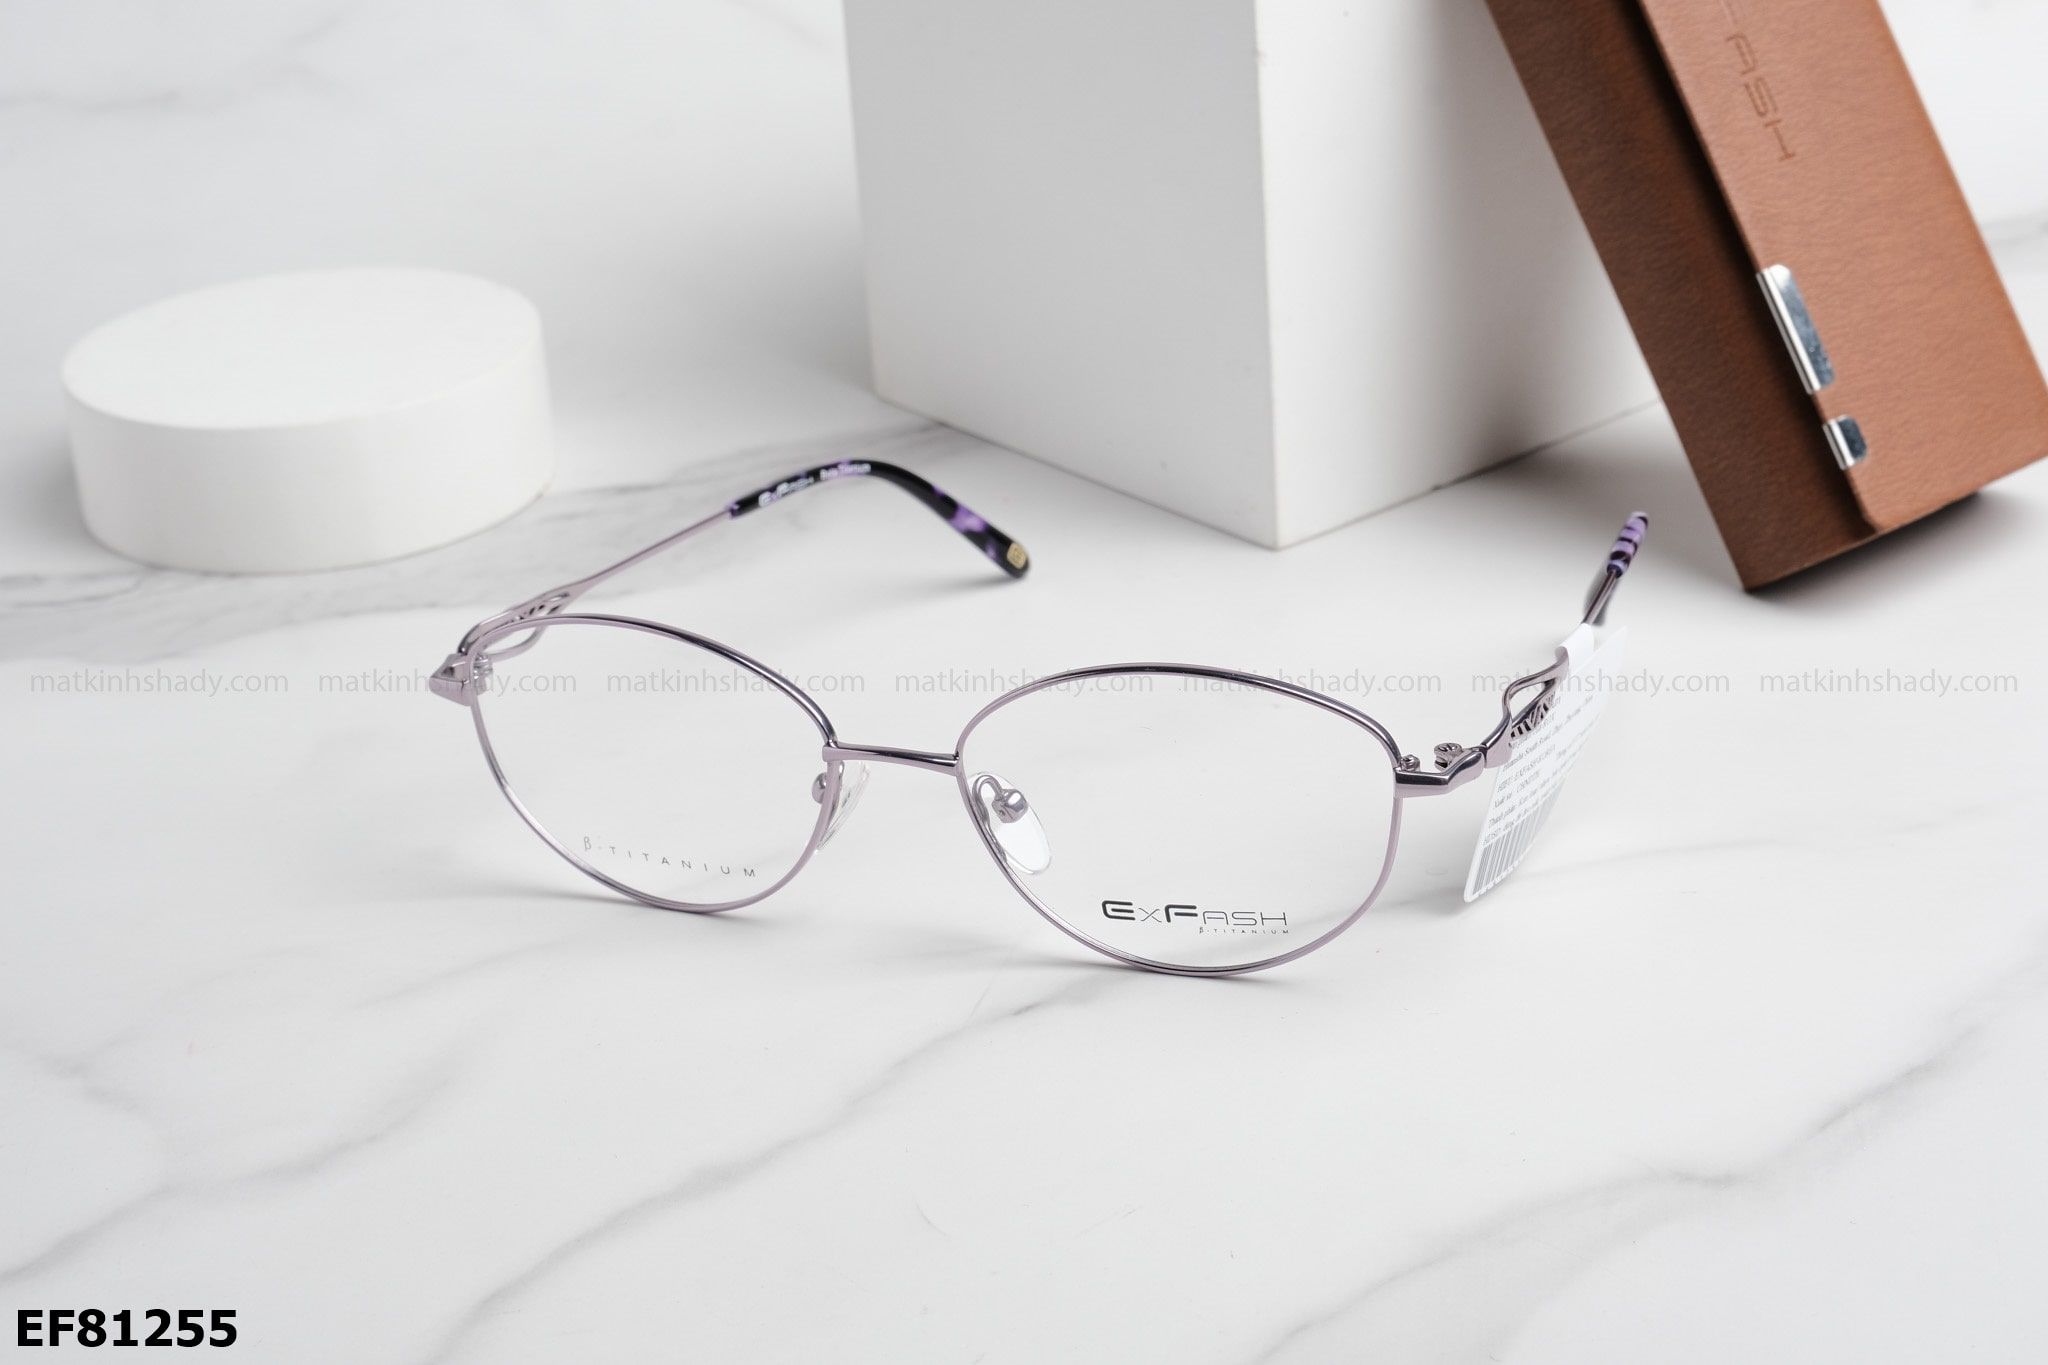  Exfash Eyewear - Glasses - EF81255 